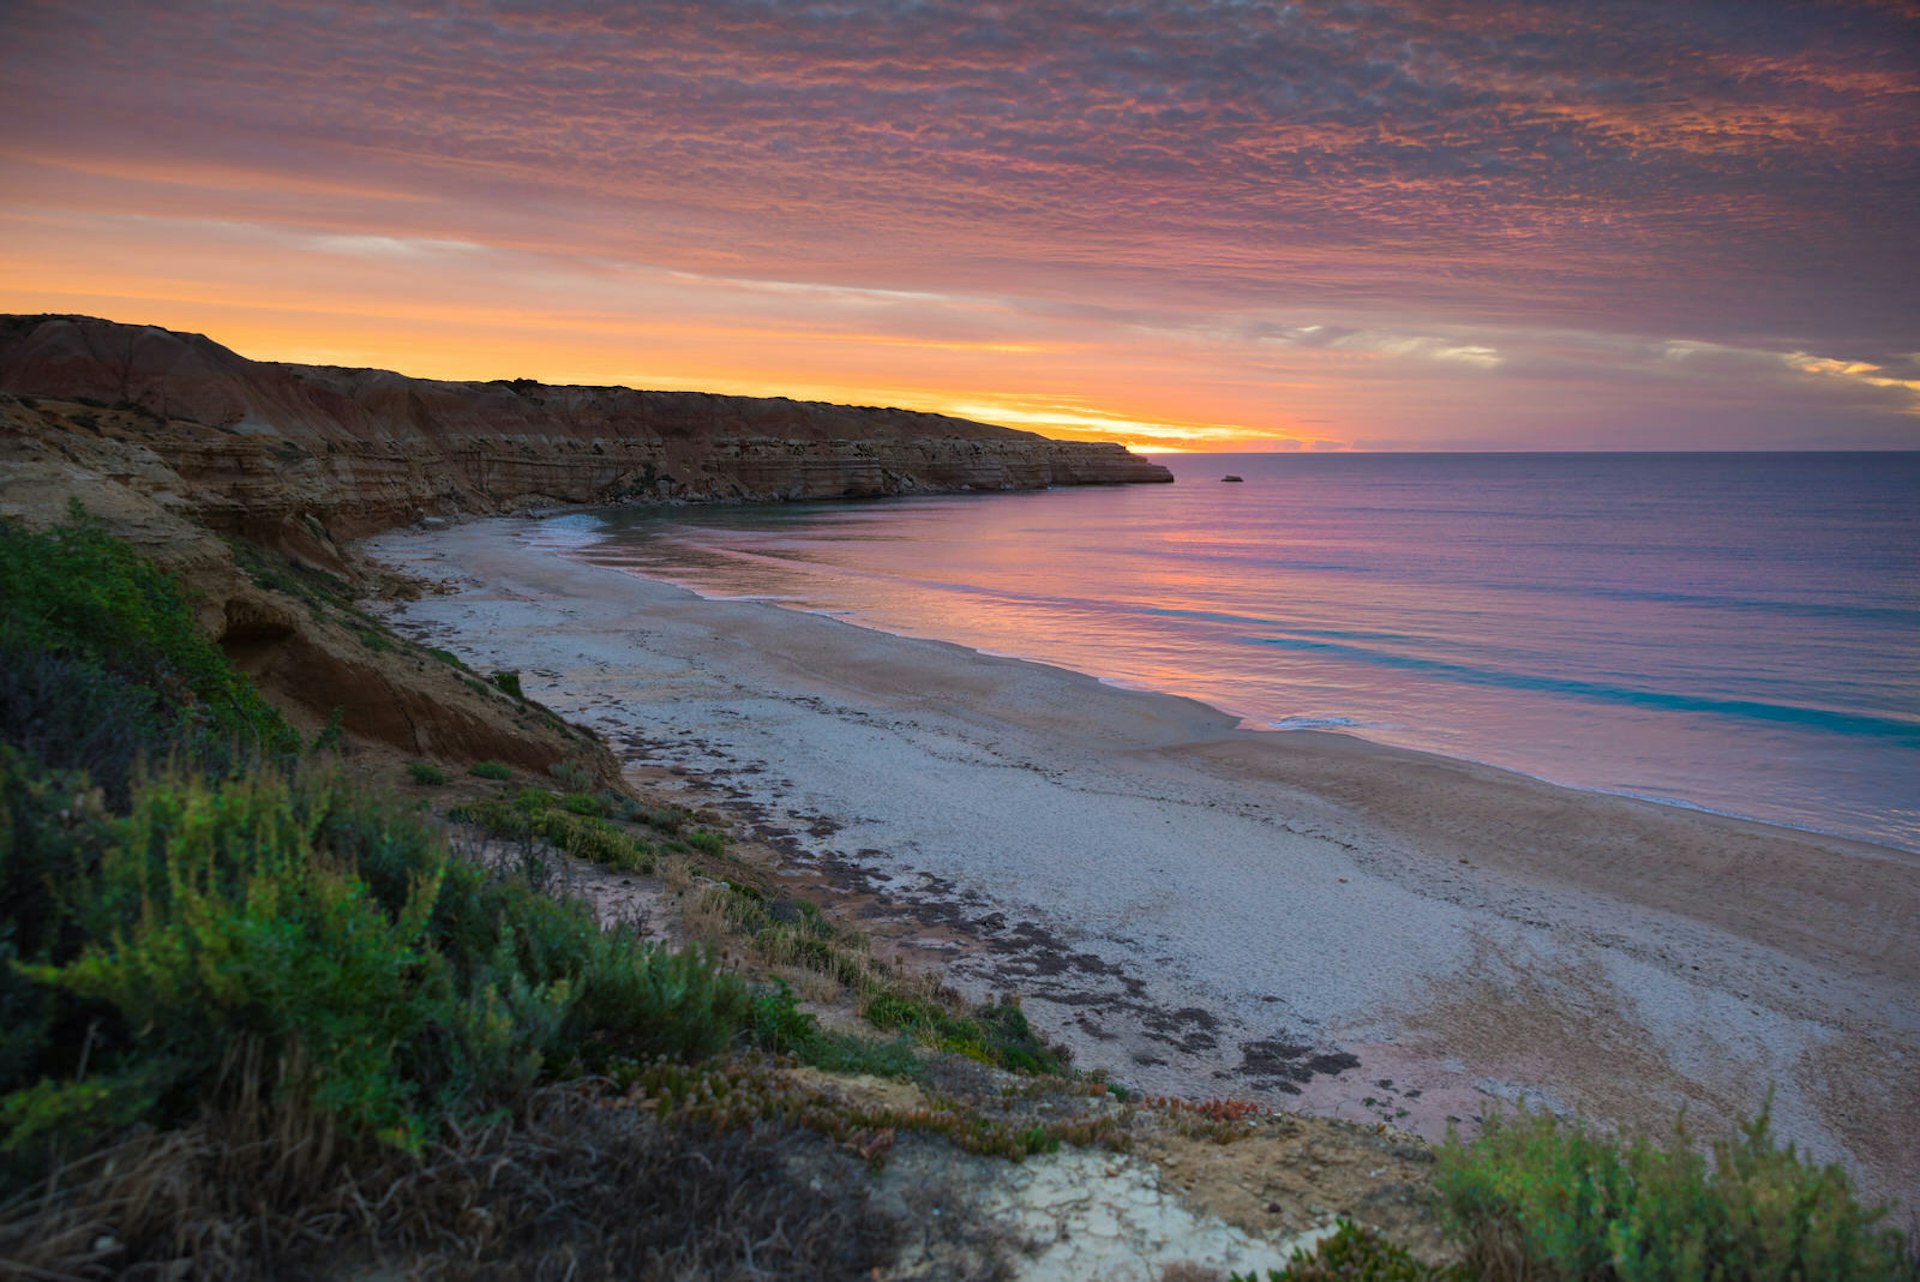 Australian Beach Scenes Nudes - Australia's 7 best nudist beaches - Lonely Planet